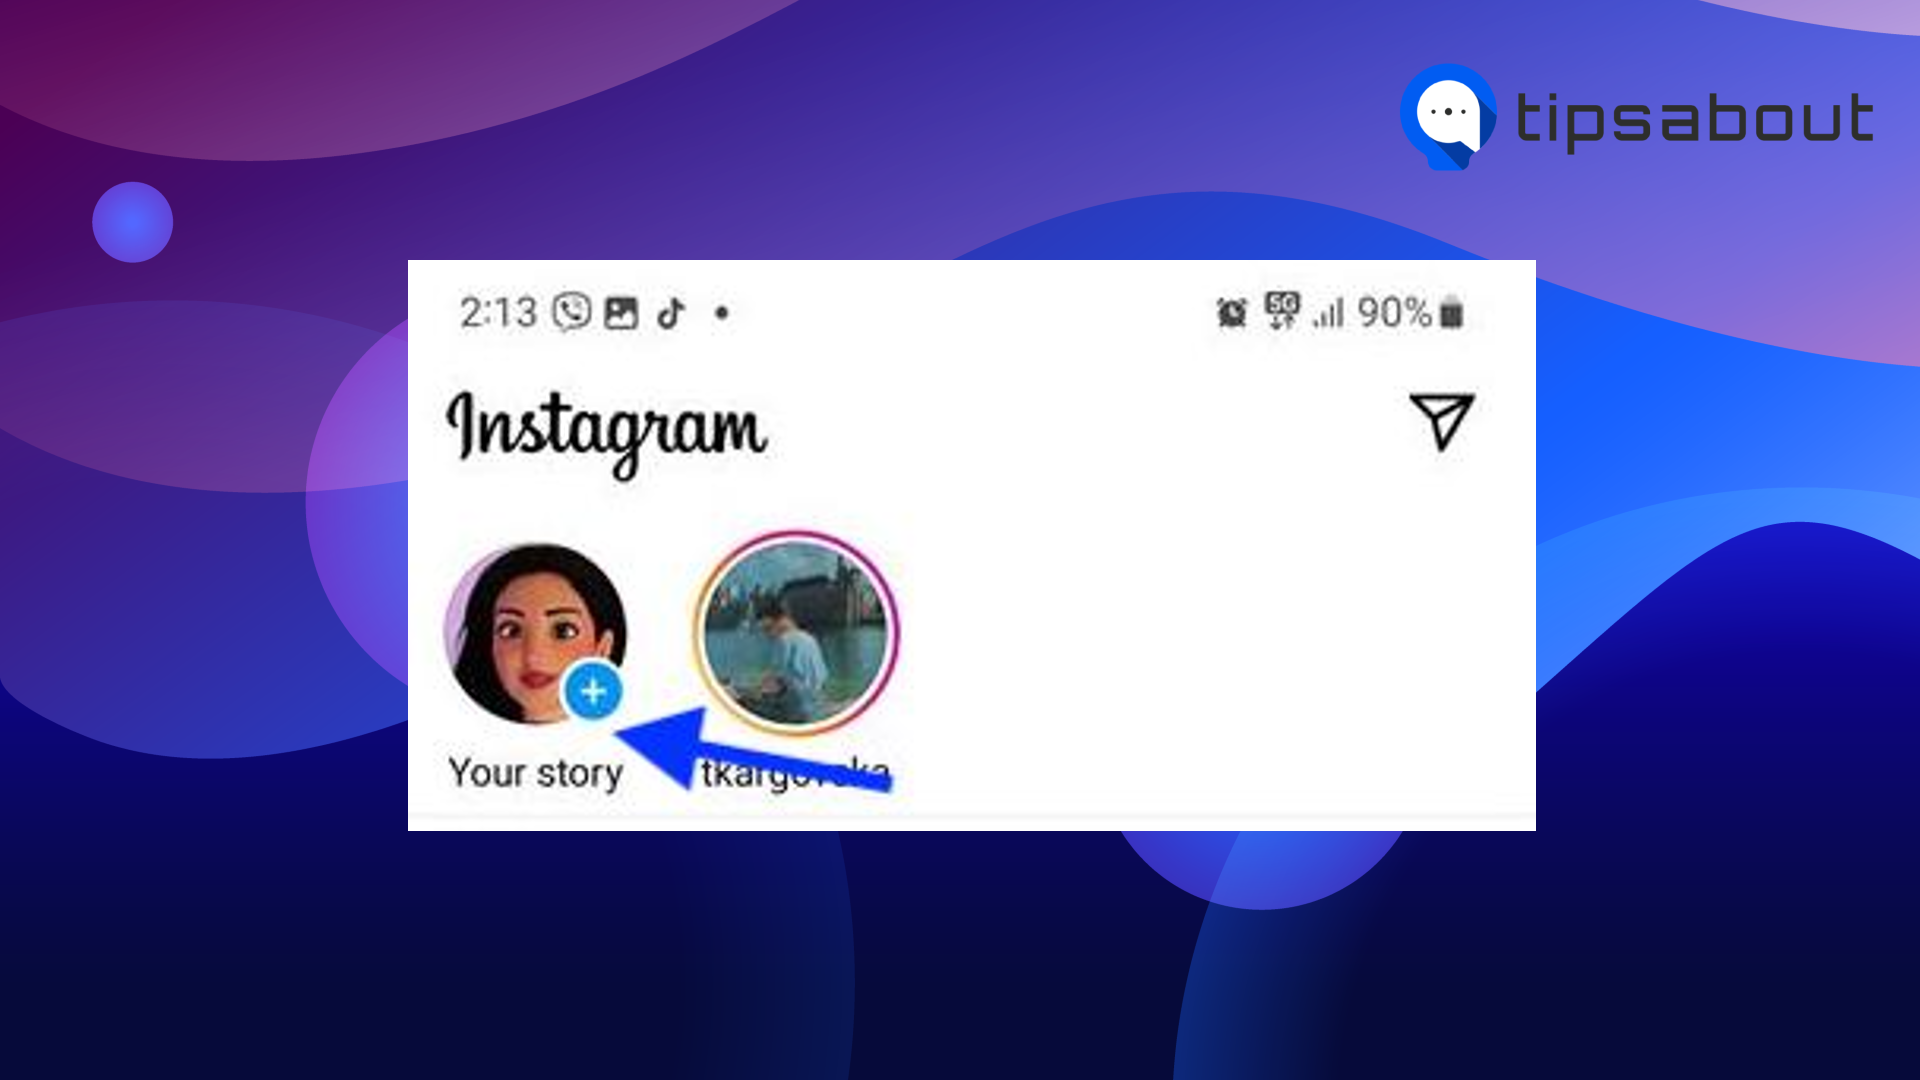 Your Story option on Instagram (upper left corner)